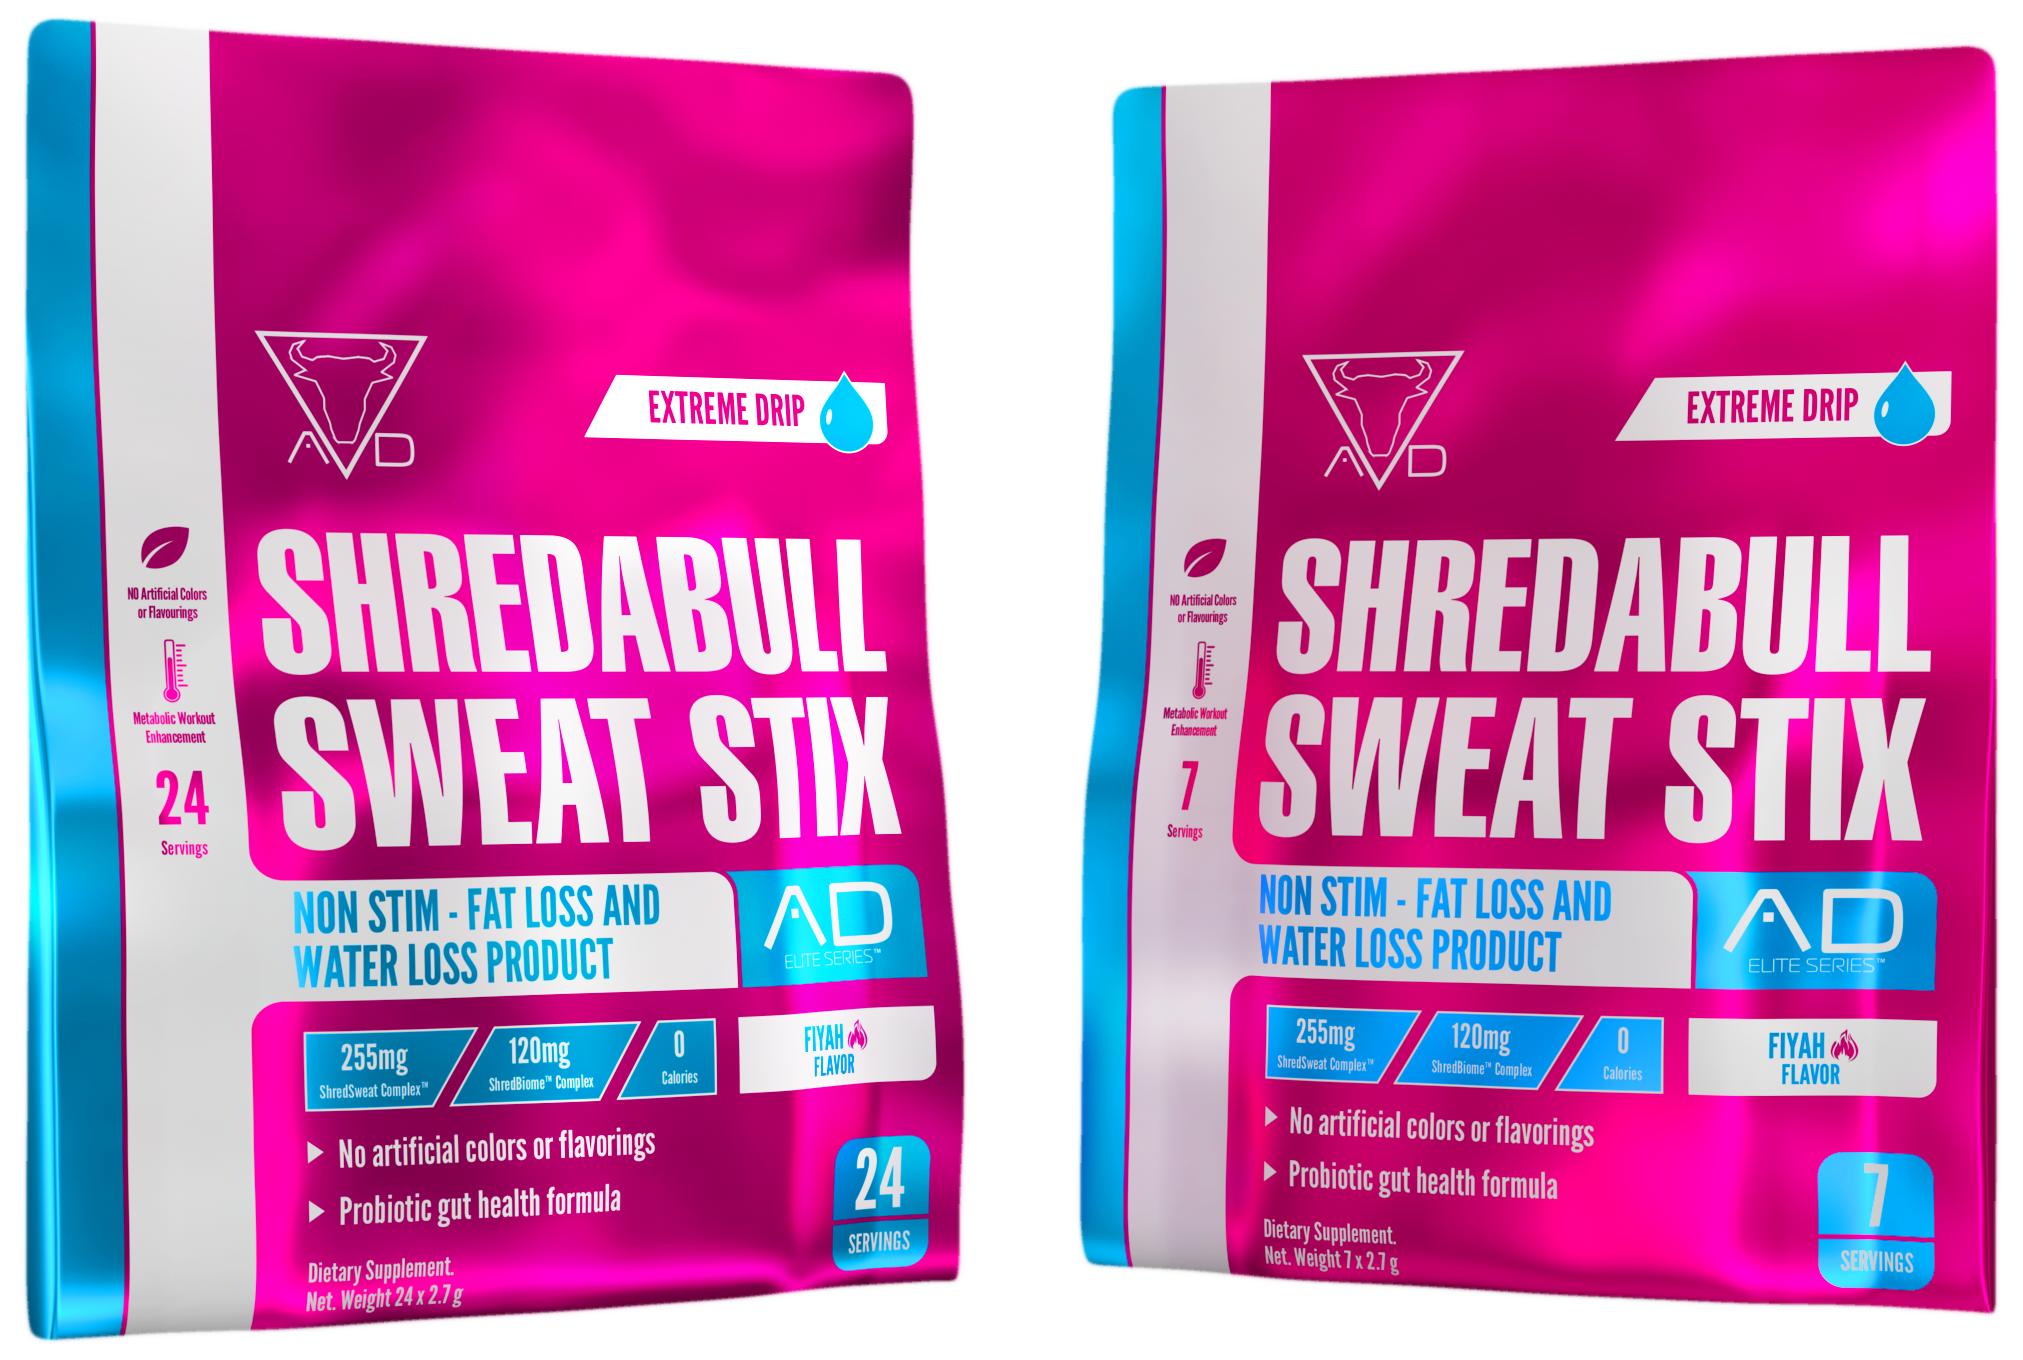 Shredabull Sweat Stix™ – For Extreme Drip